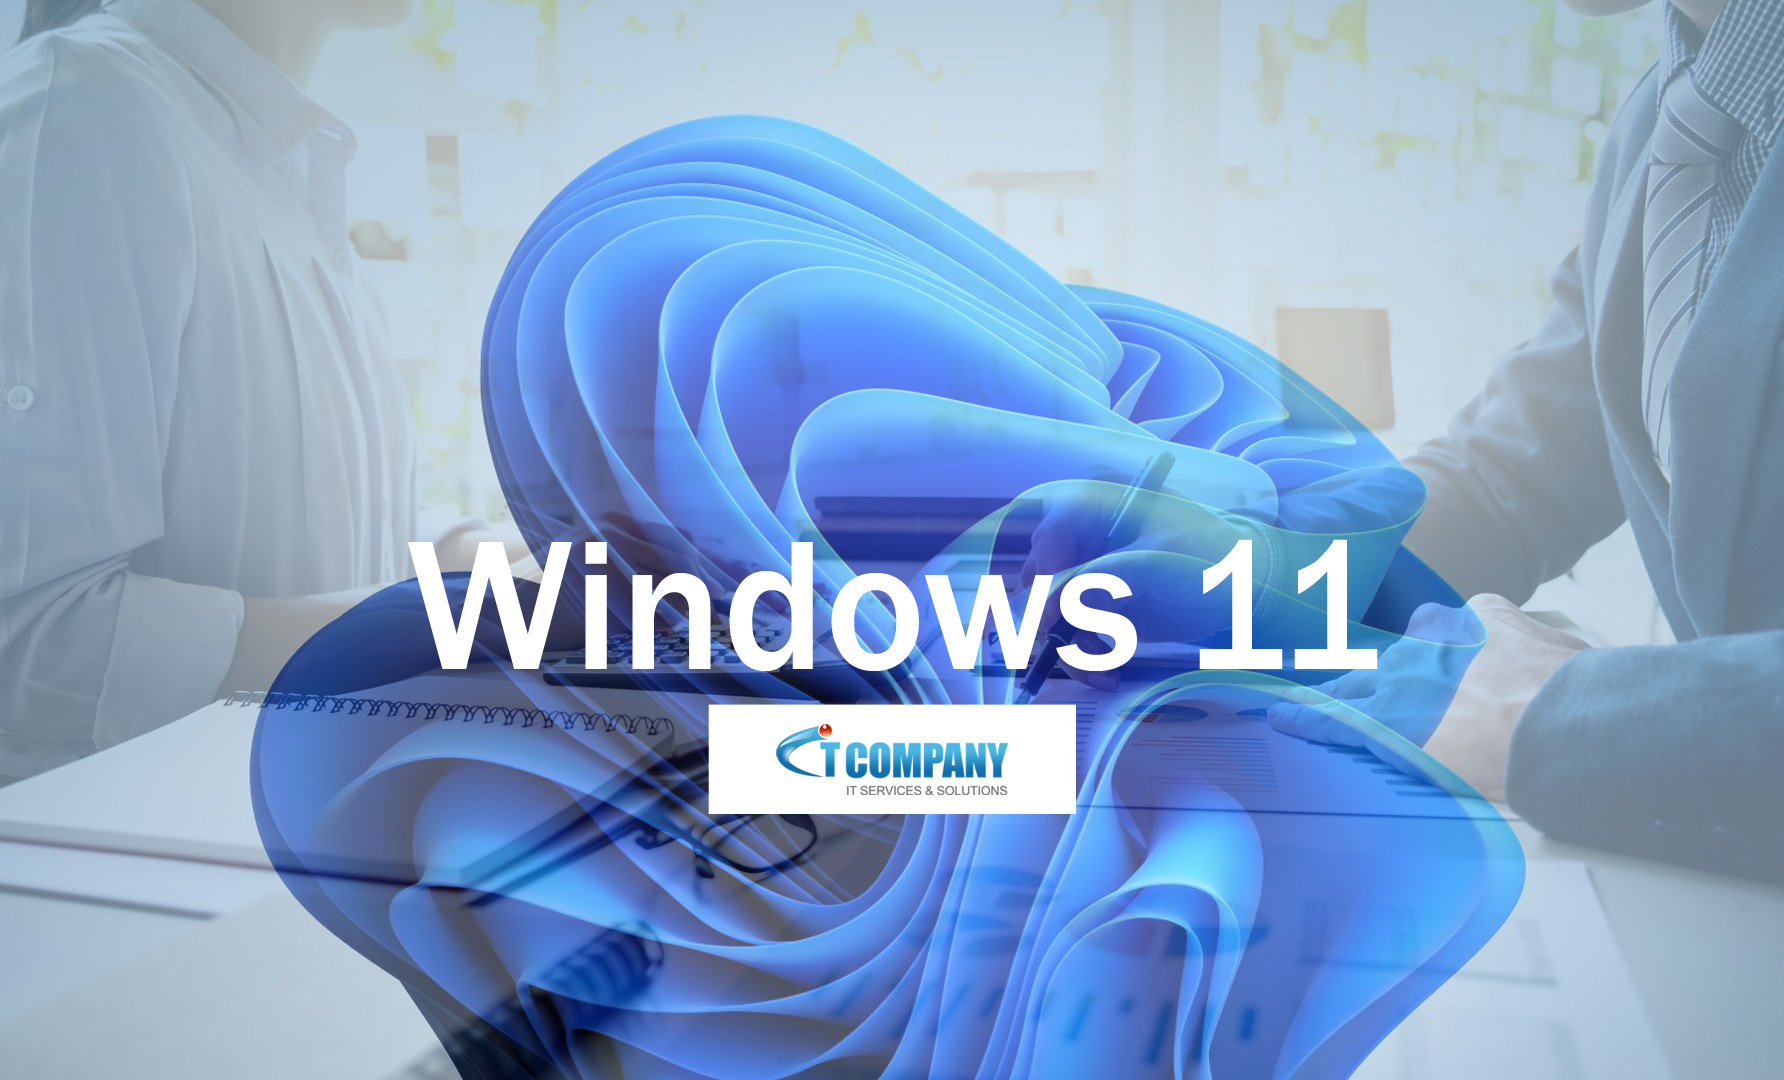 Microsoft is now releasing new hardware indicators to Windows 11